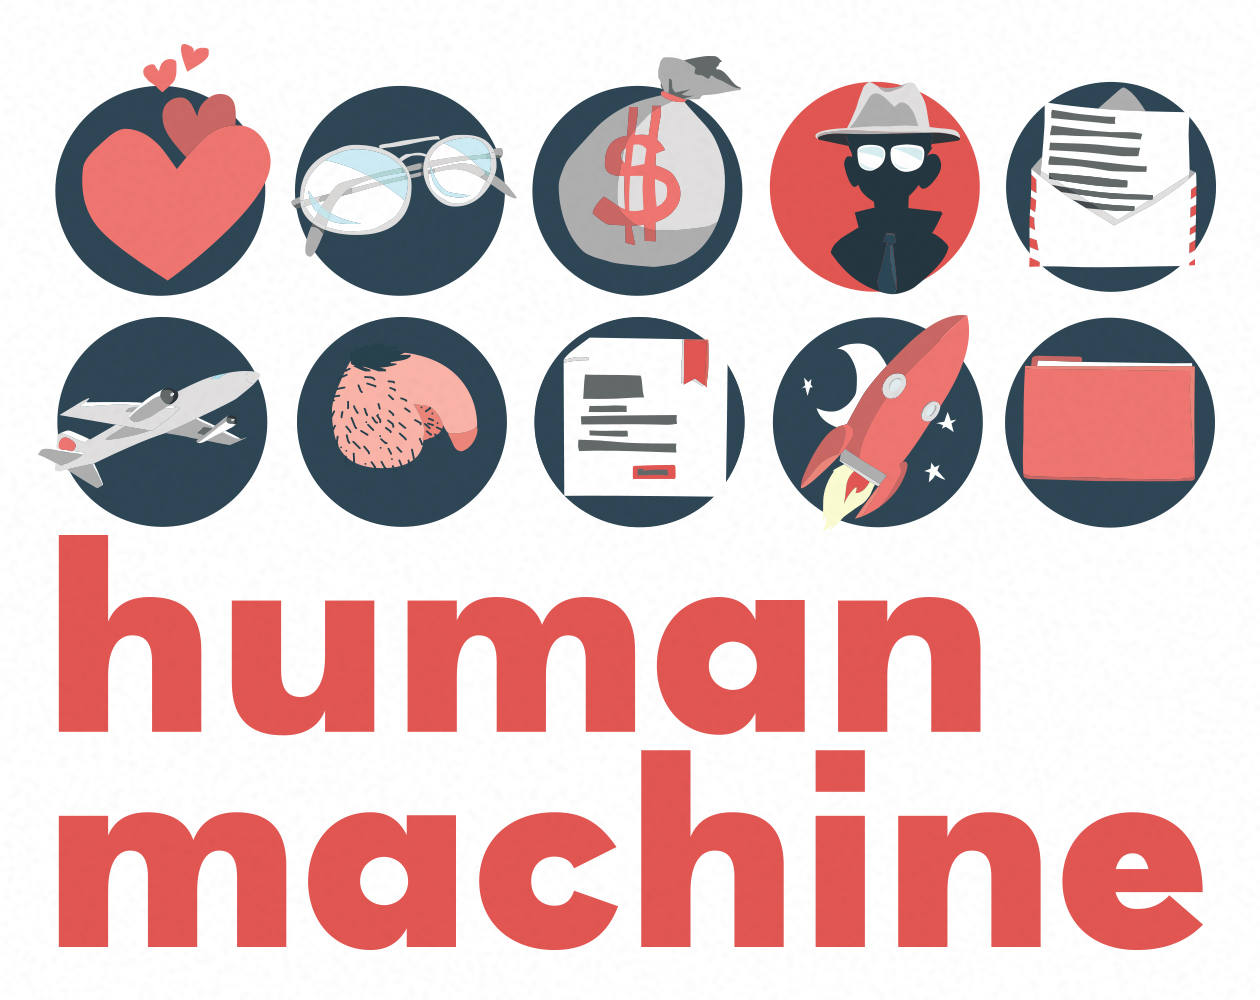 The Human Machine, playful phishing tool